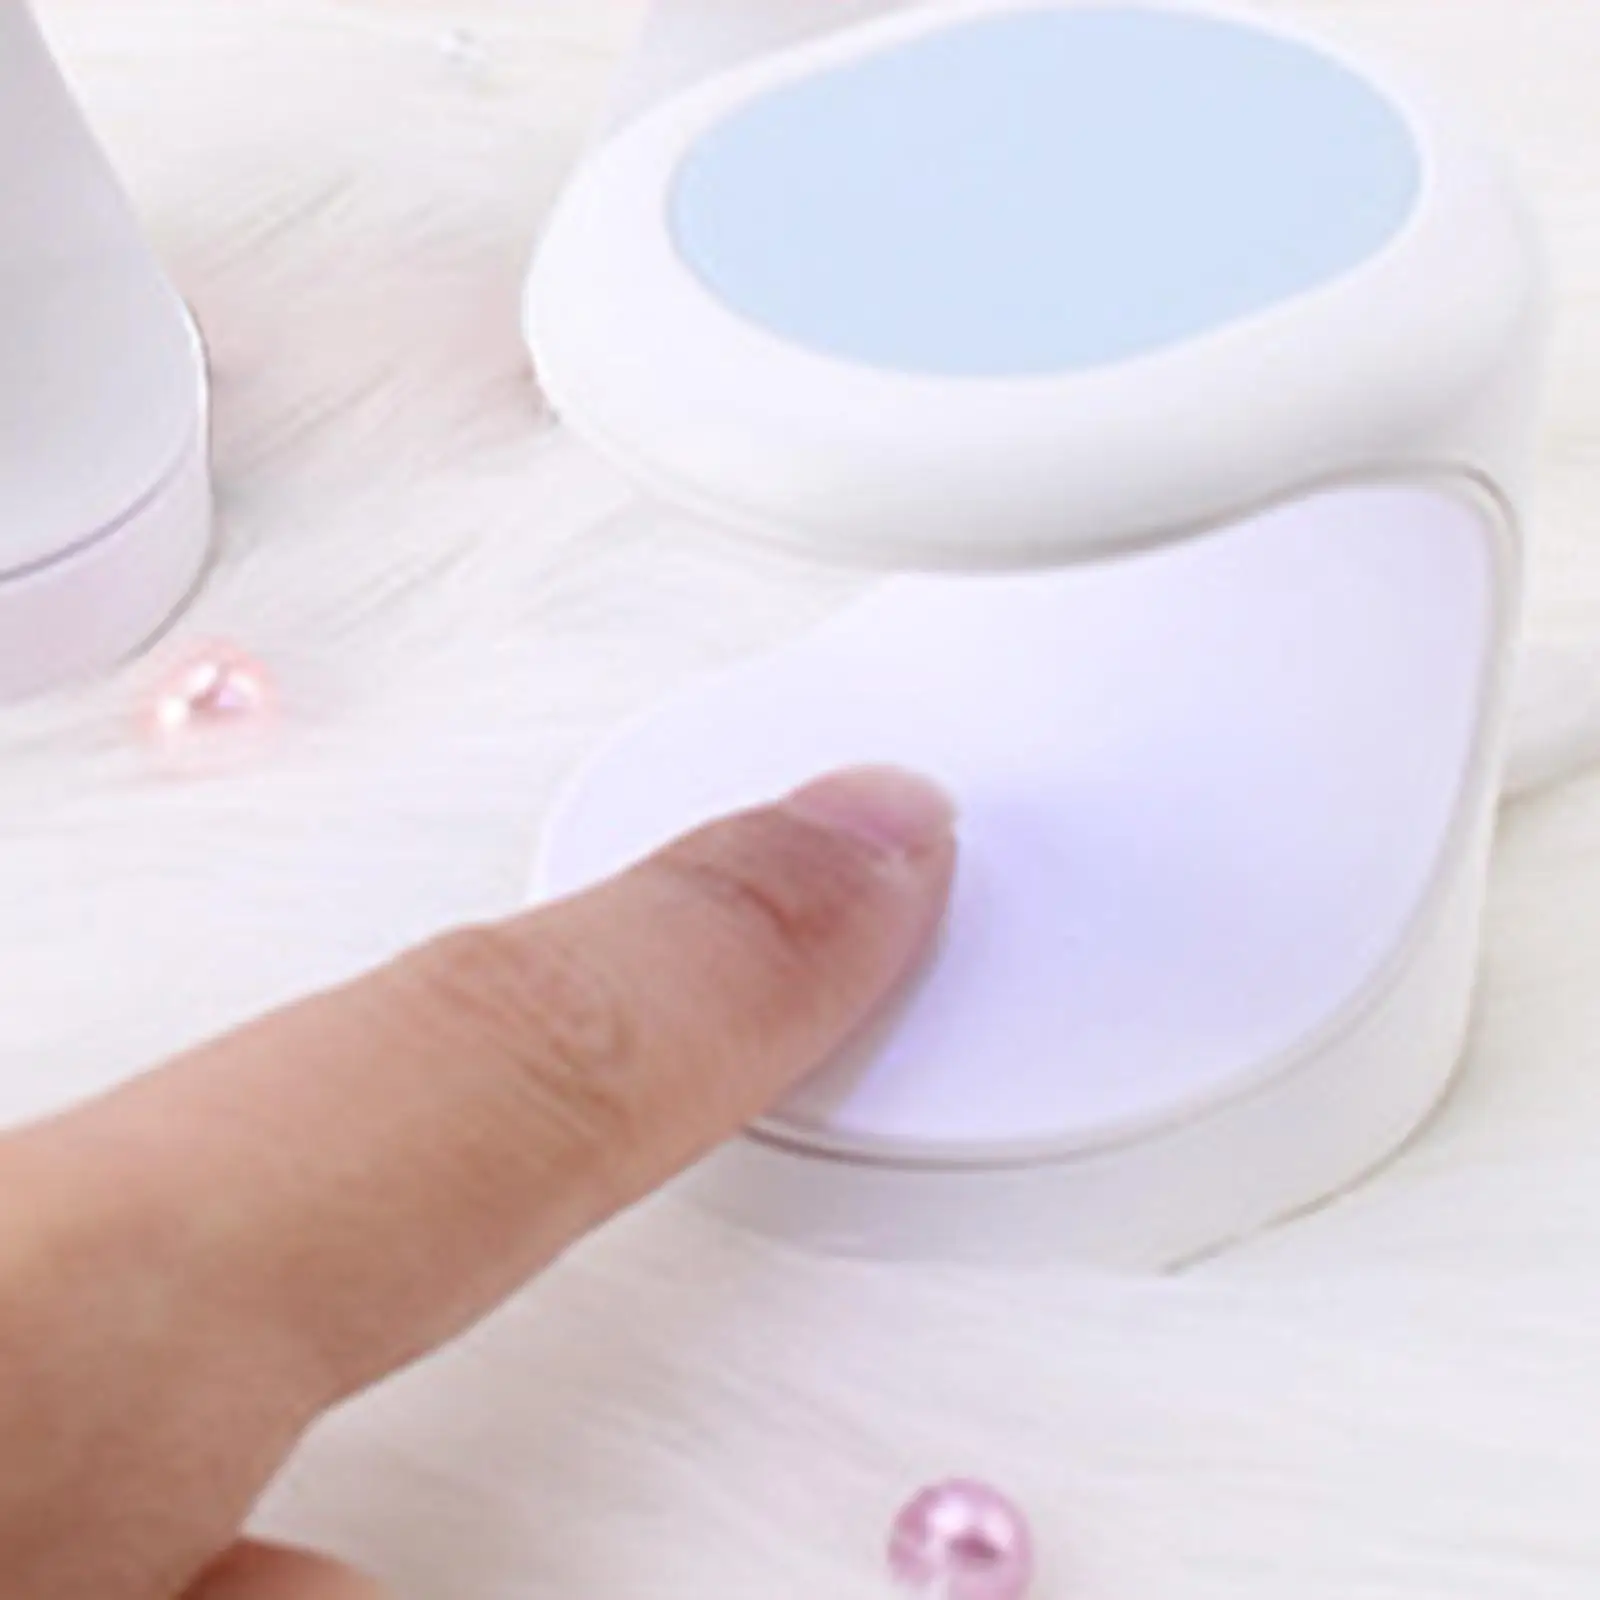 Mini Nail Dryer Lamp Single Finger USB Charging 3 LEDs UV LED Lamp for Gel Polish